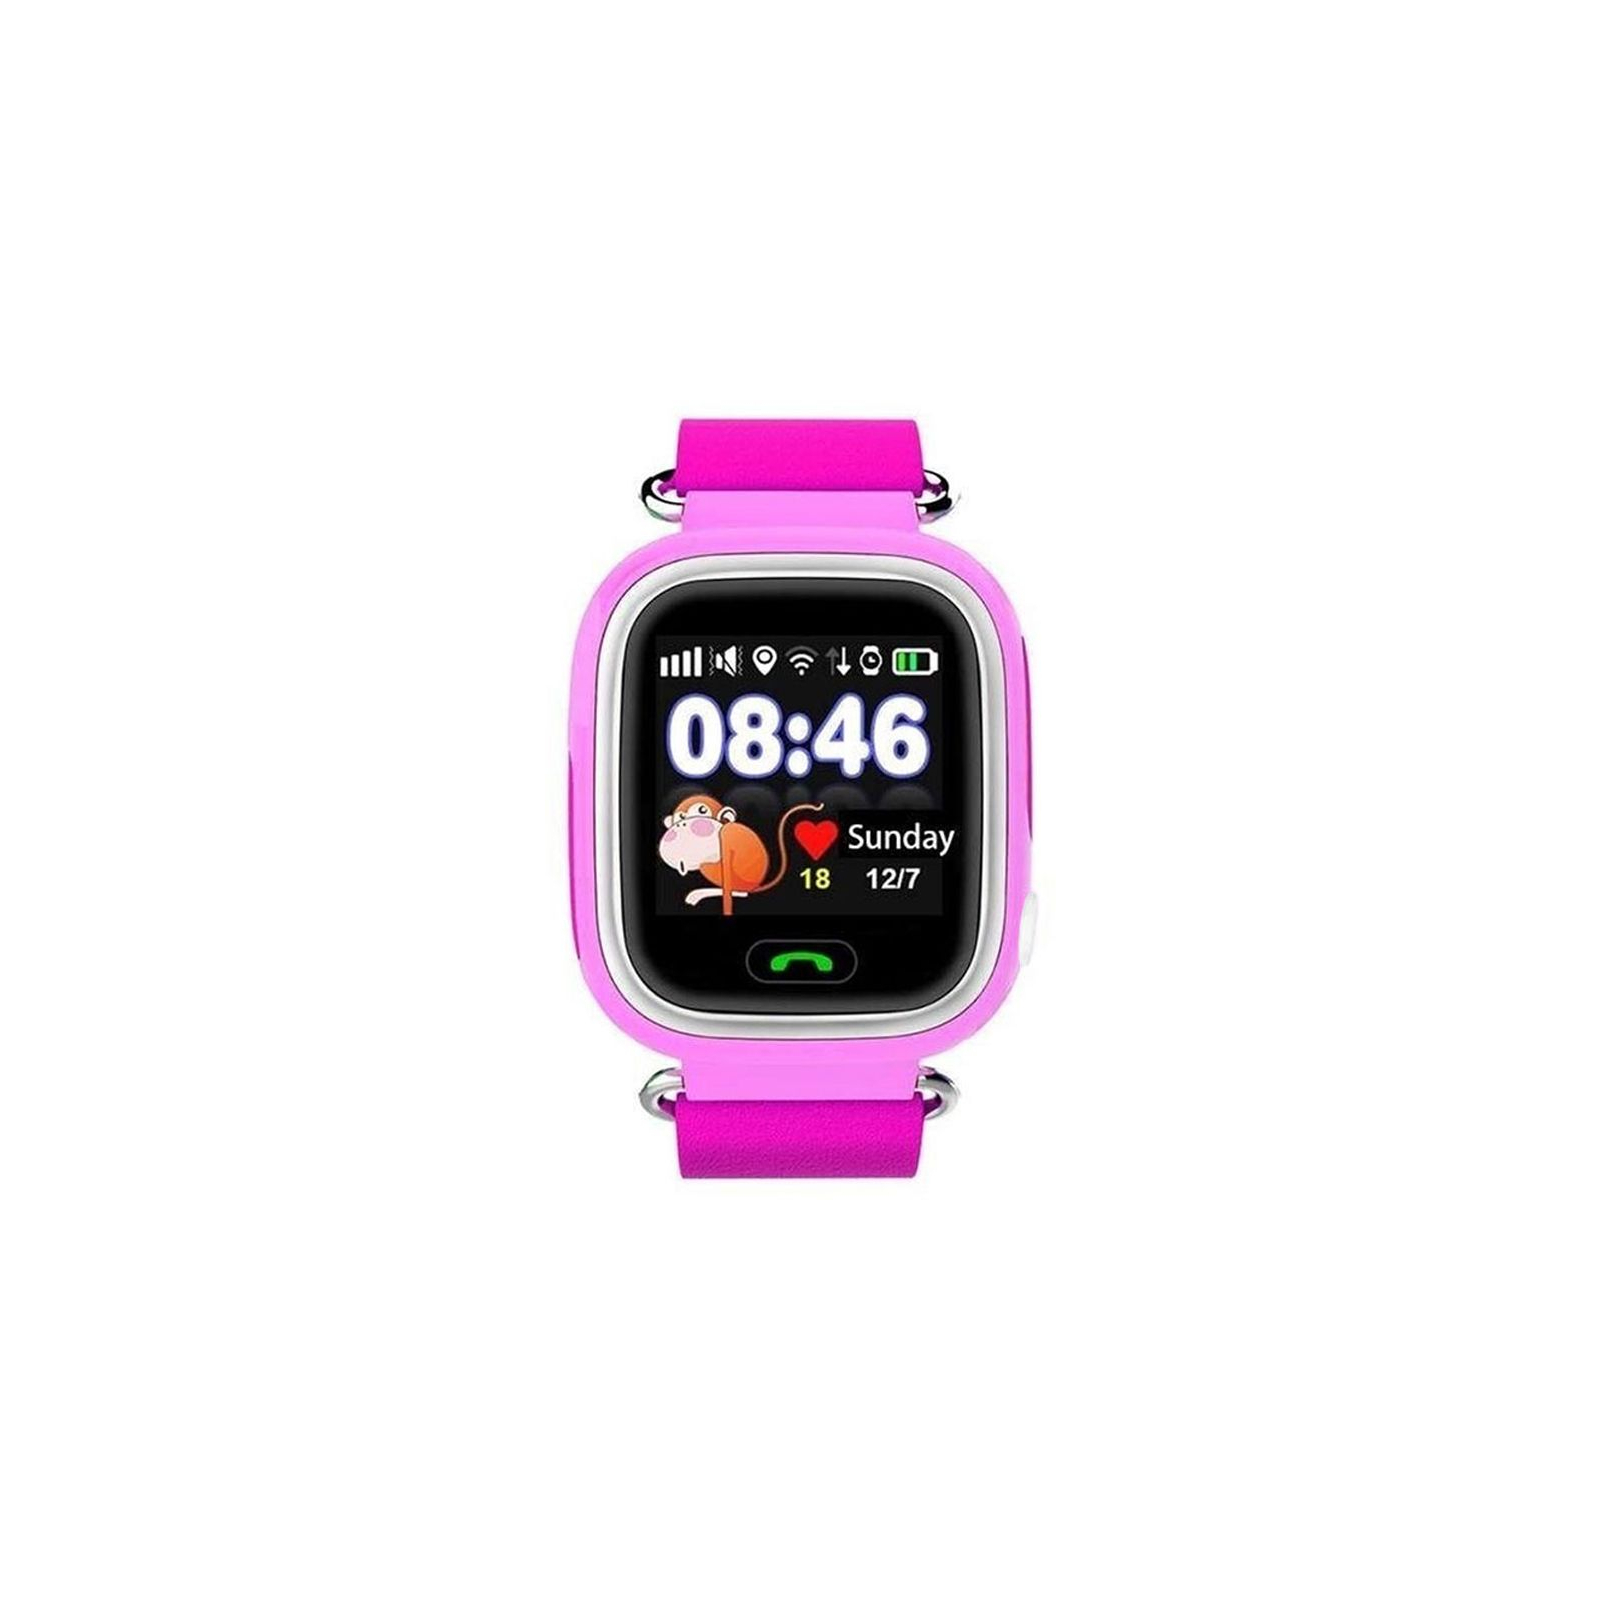 Смарт-годинник UWatch Q90 Kid smart watch Black (F_50521)